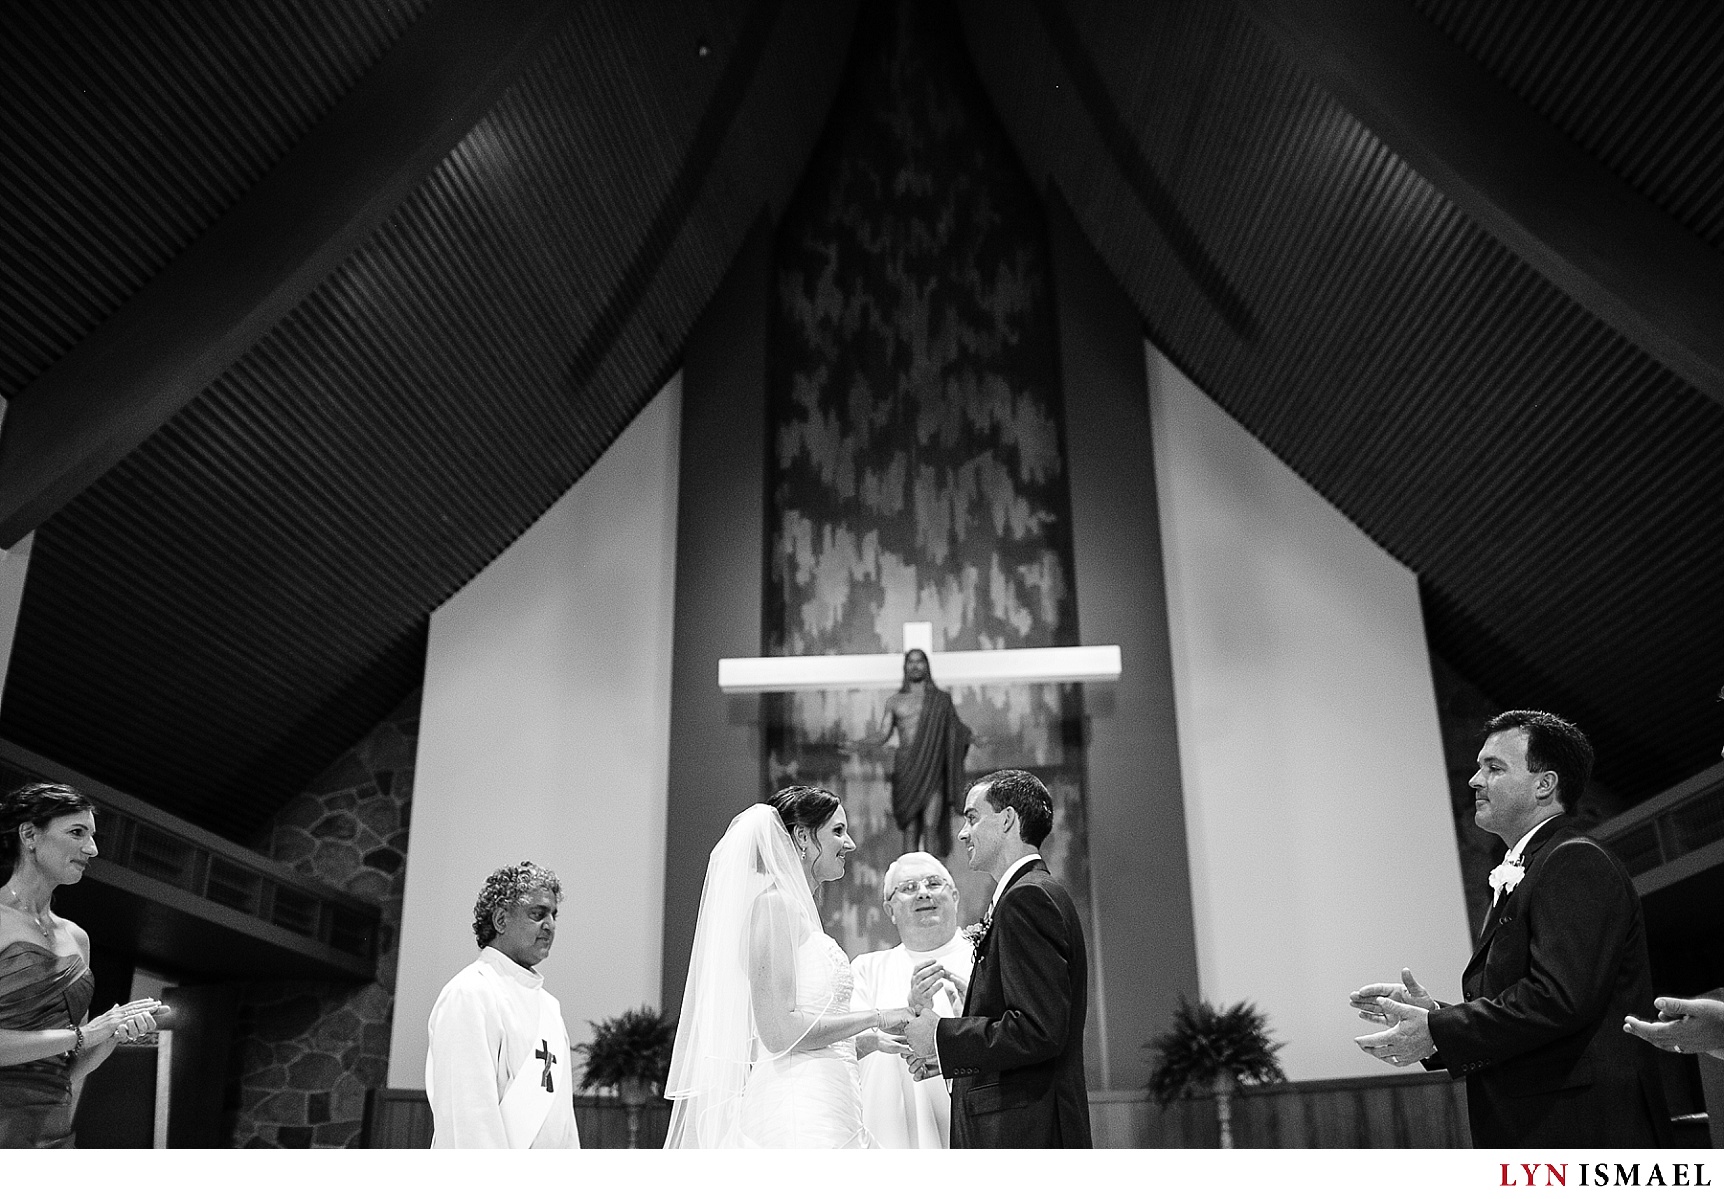 A wedding ceremony inside a Roman Catholic Church.